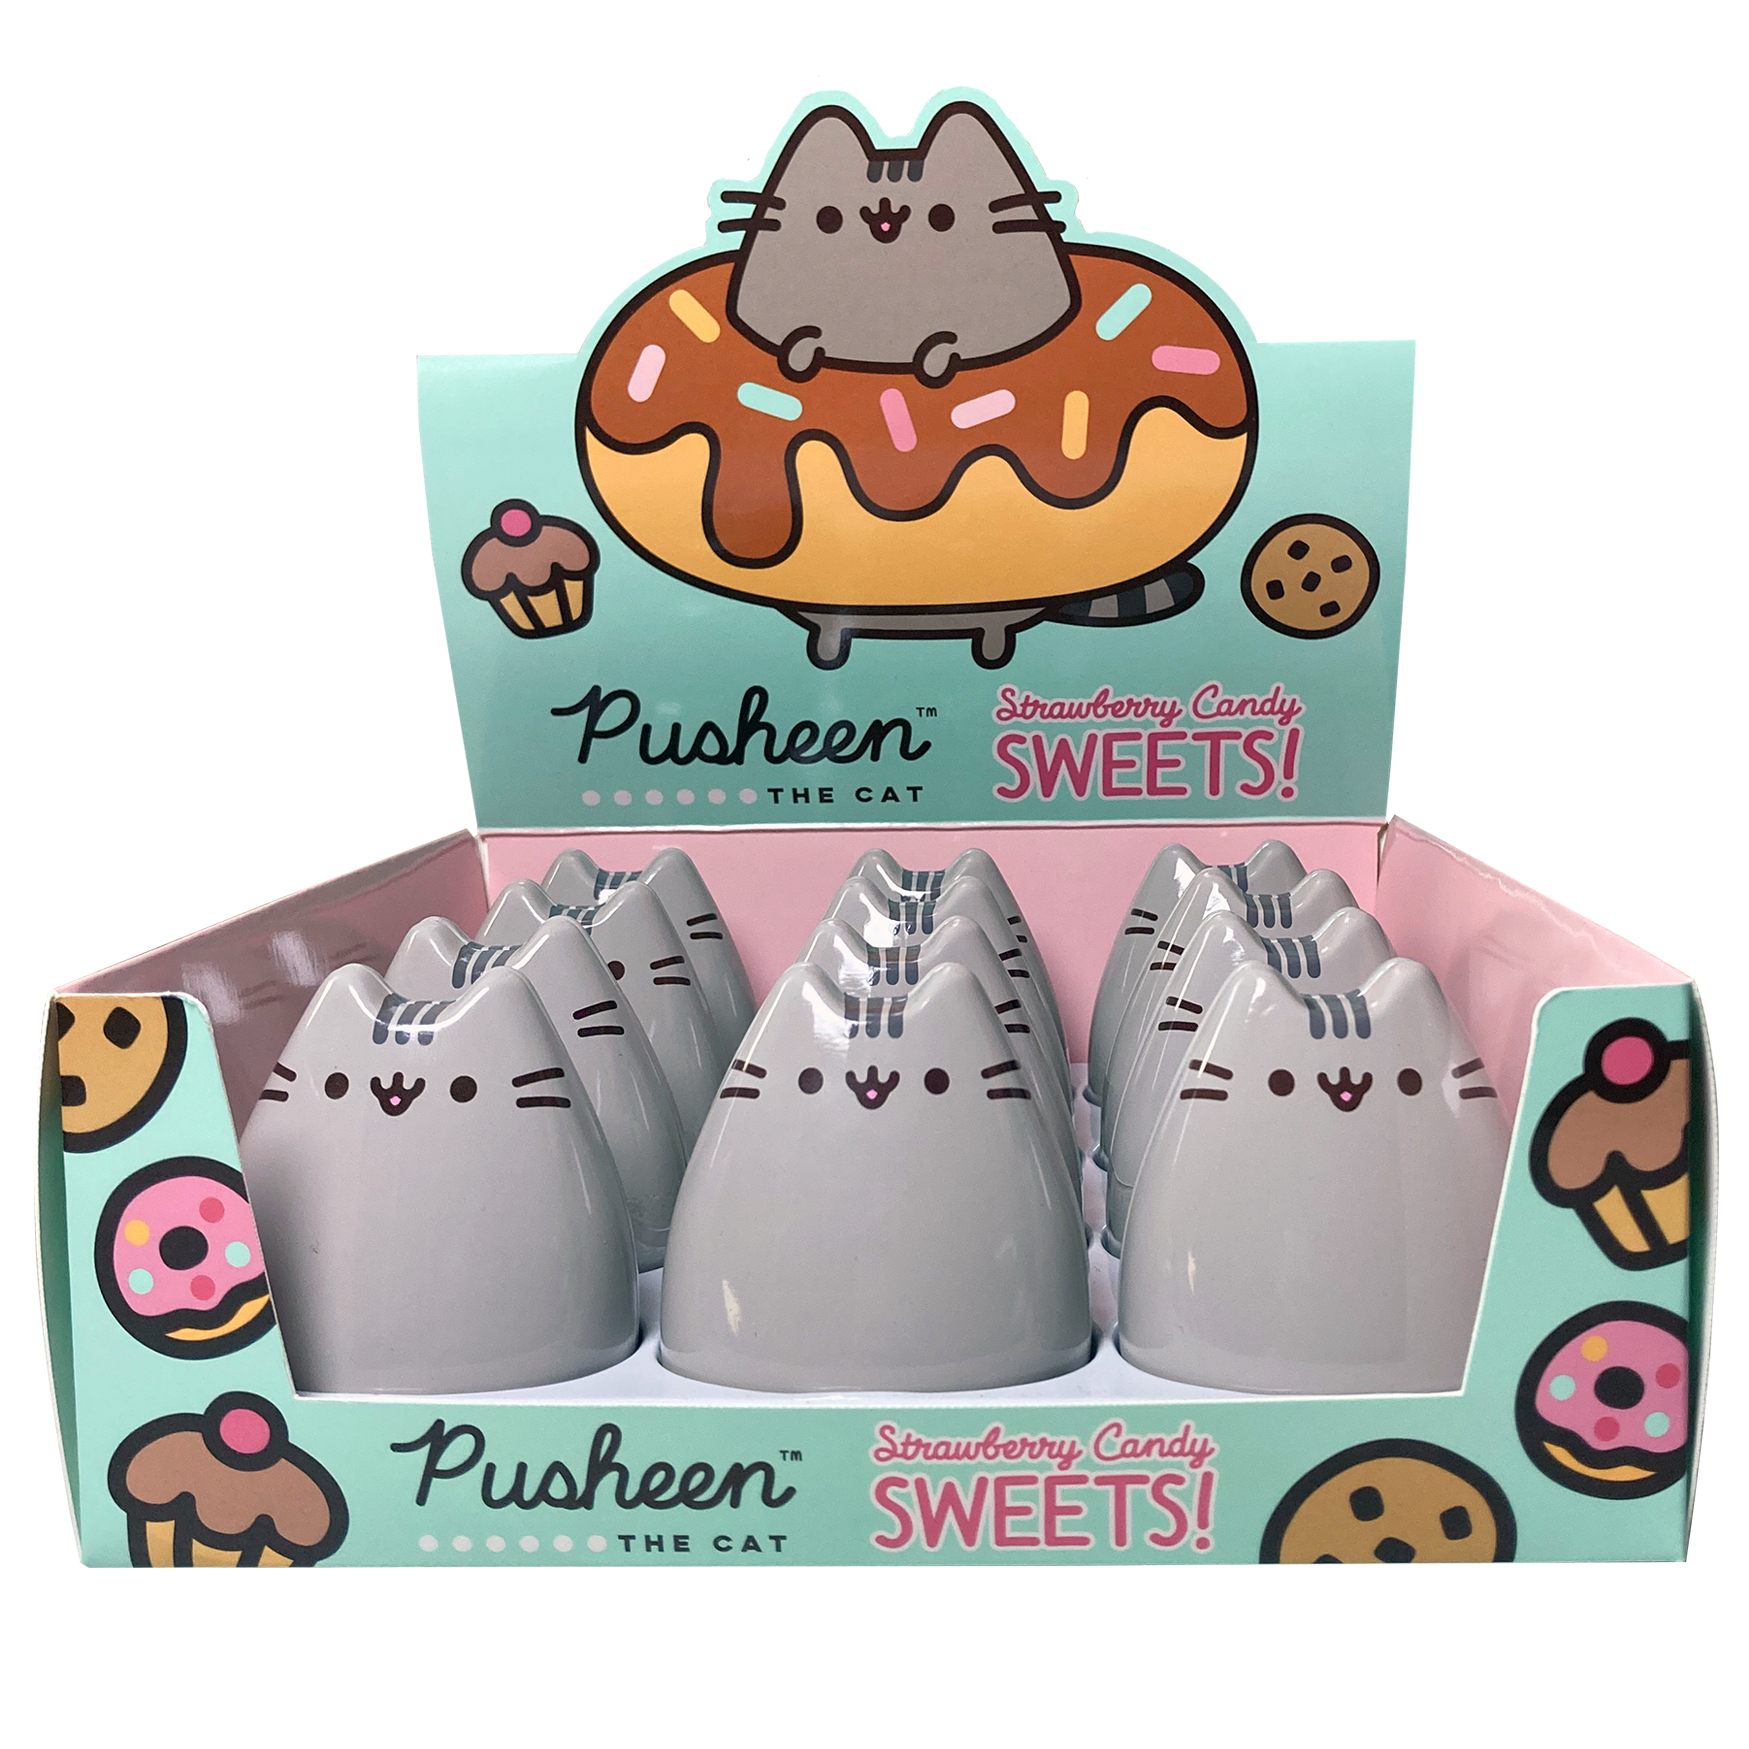 Pusheen Sweets! - Boston America Corp.